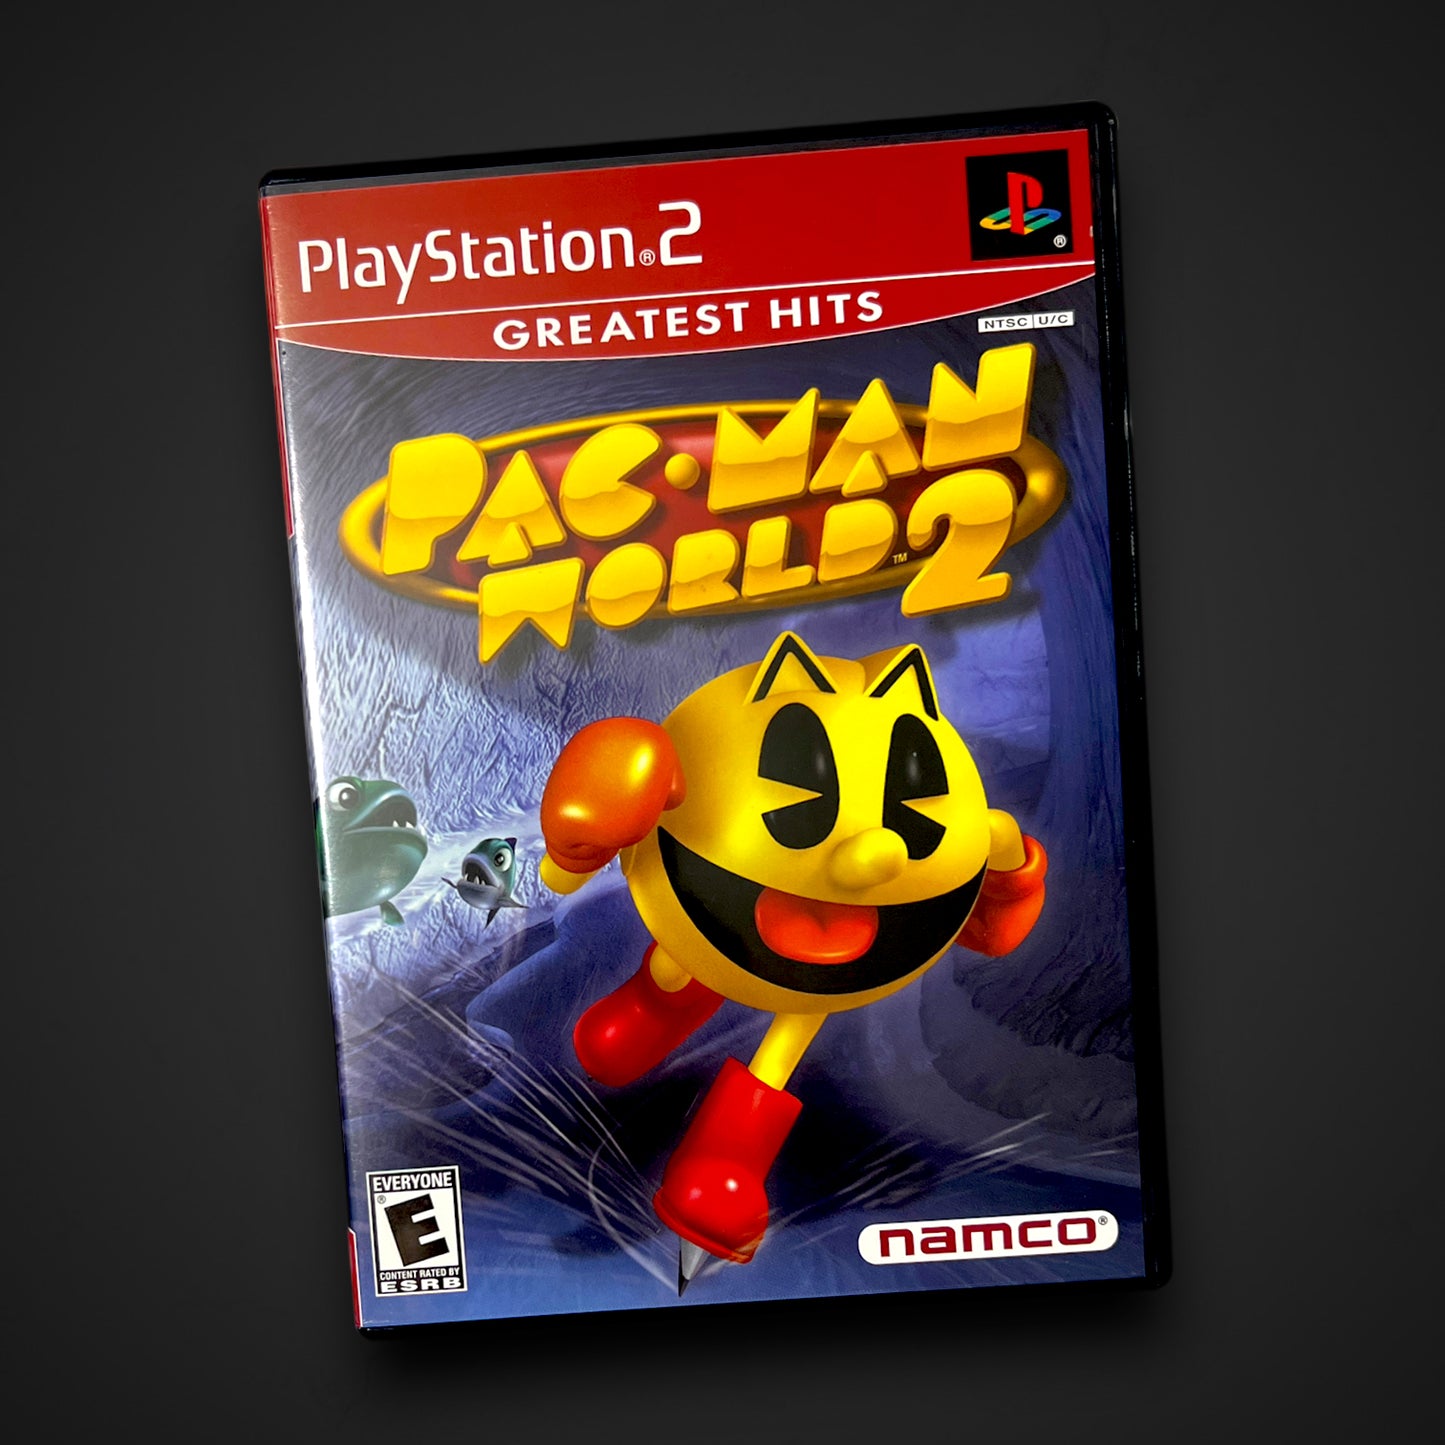 Pac-Man World 2 [Greatest Hits] (Sony PlayStation 2, 2002)